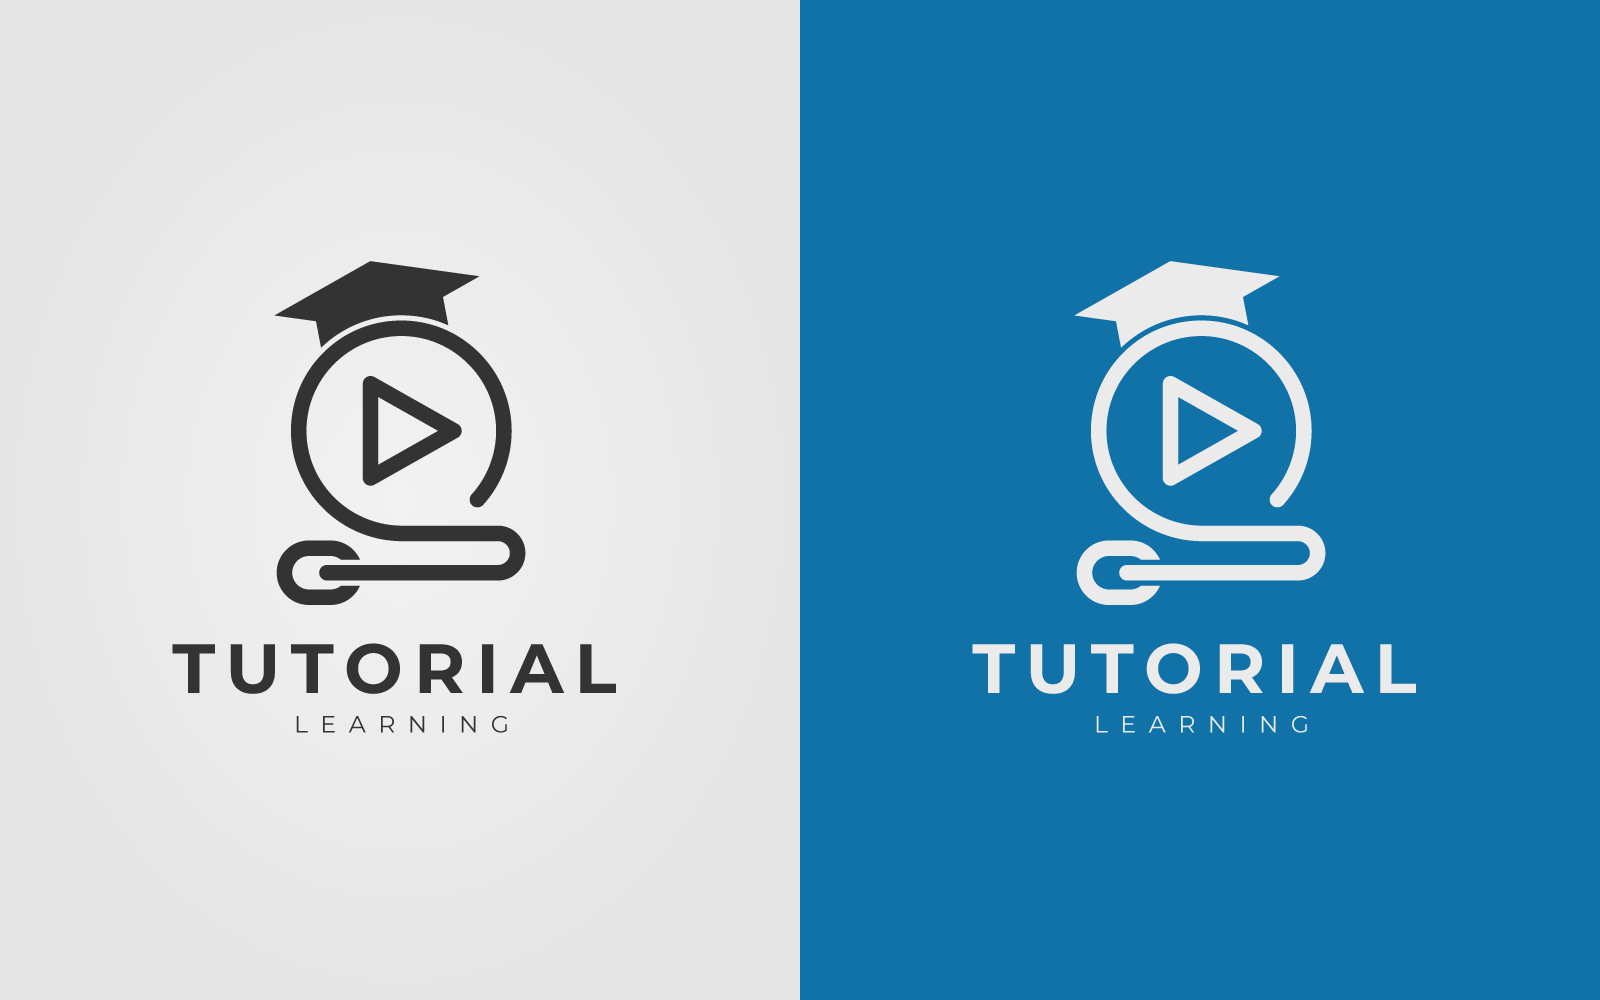 Tutorial Education Logo Design For Online Tutorial Learning Video Lesson